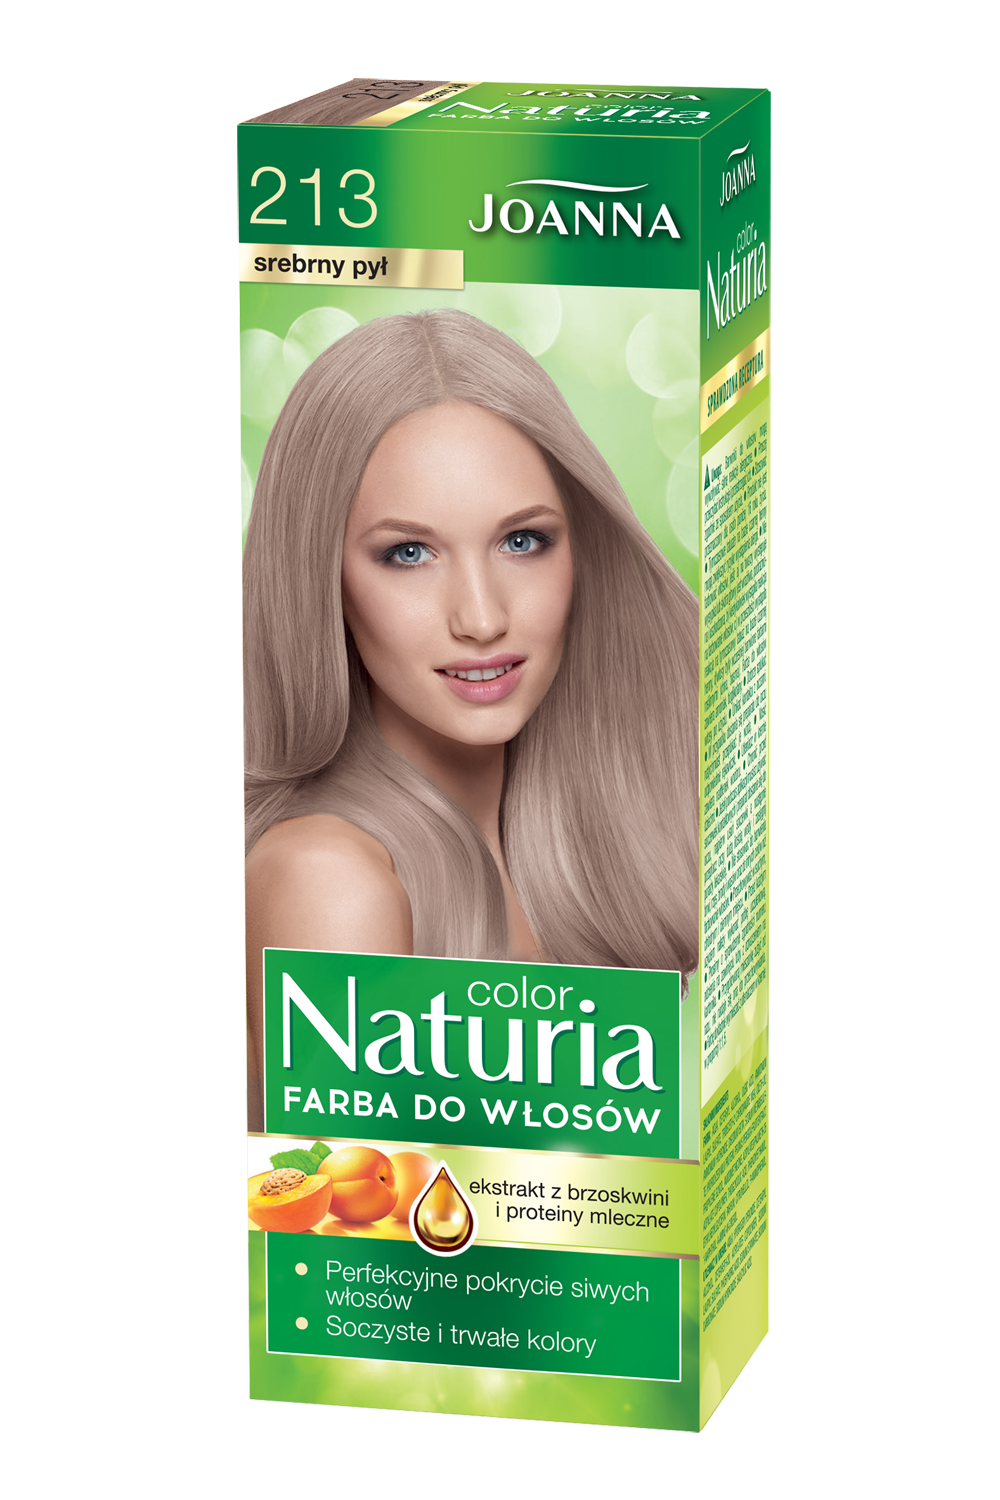 Farba do włosów Joanna Naturia Color w odcieniu nr 213 srebrny pył